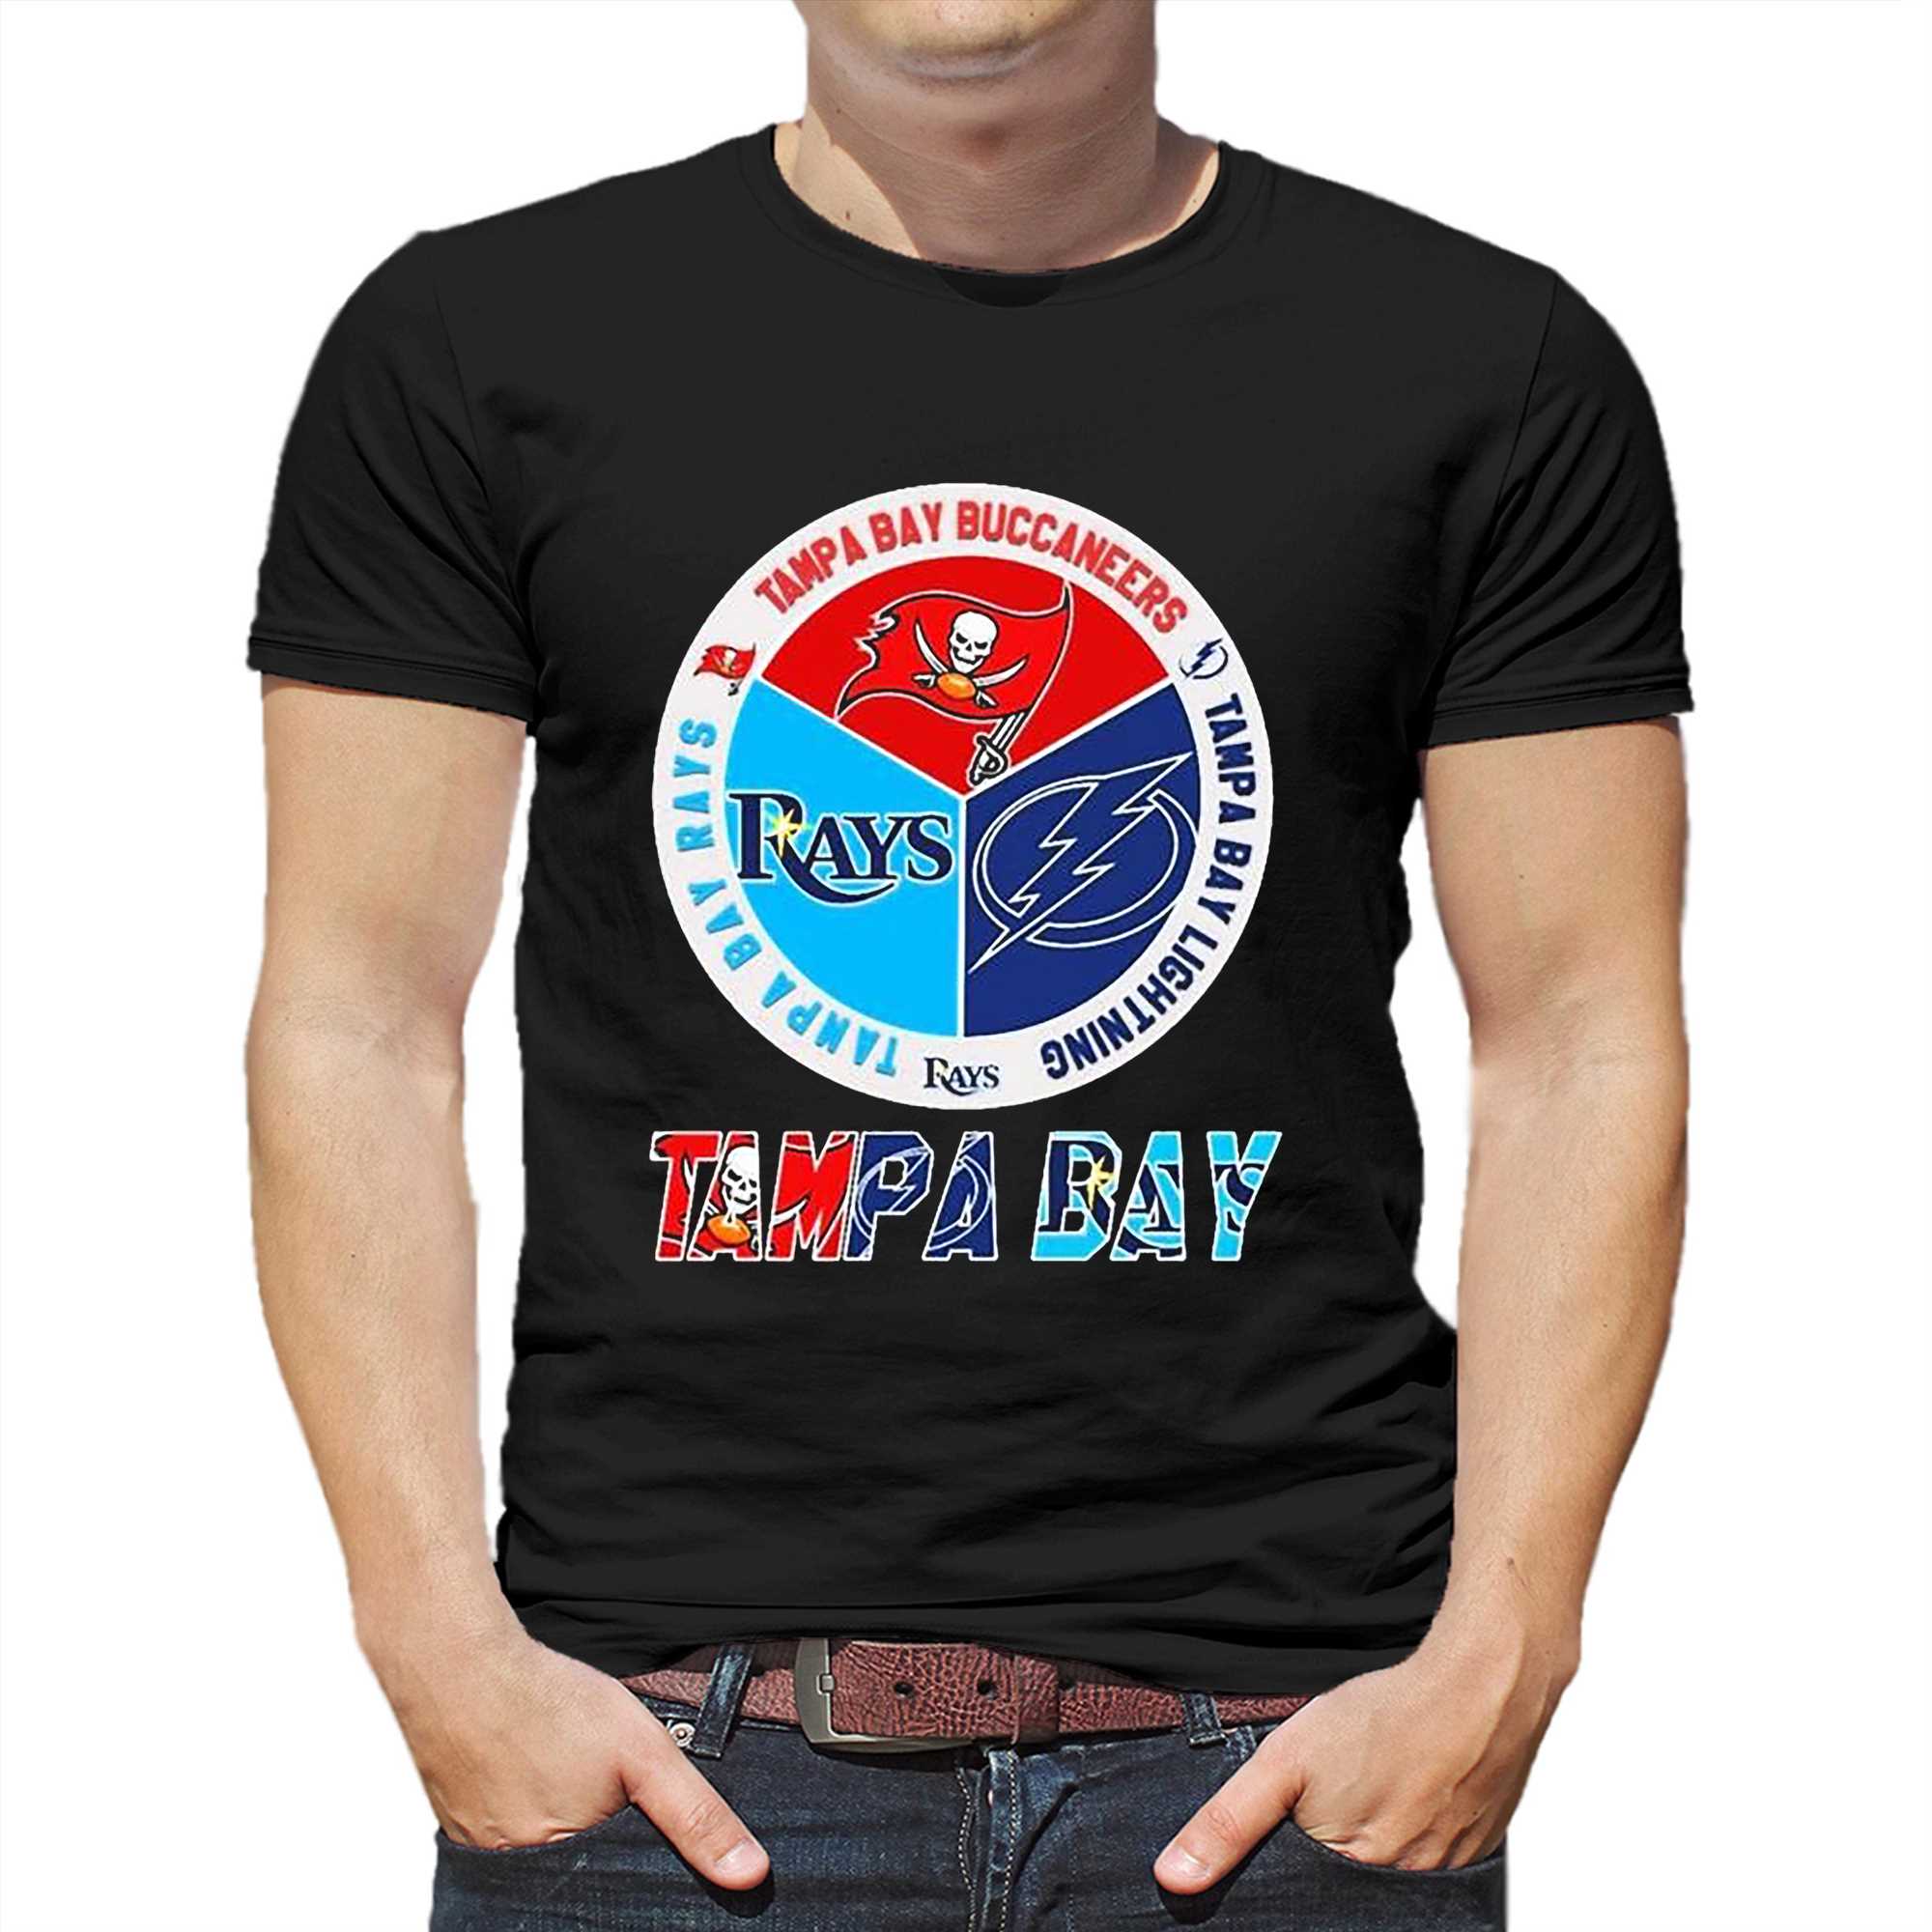 tampa bay lightning rays jersey